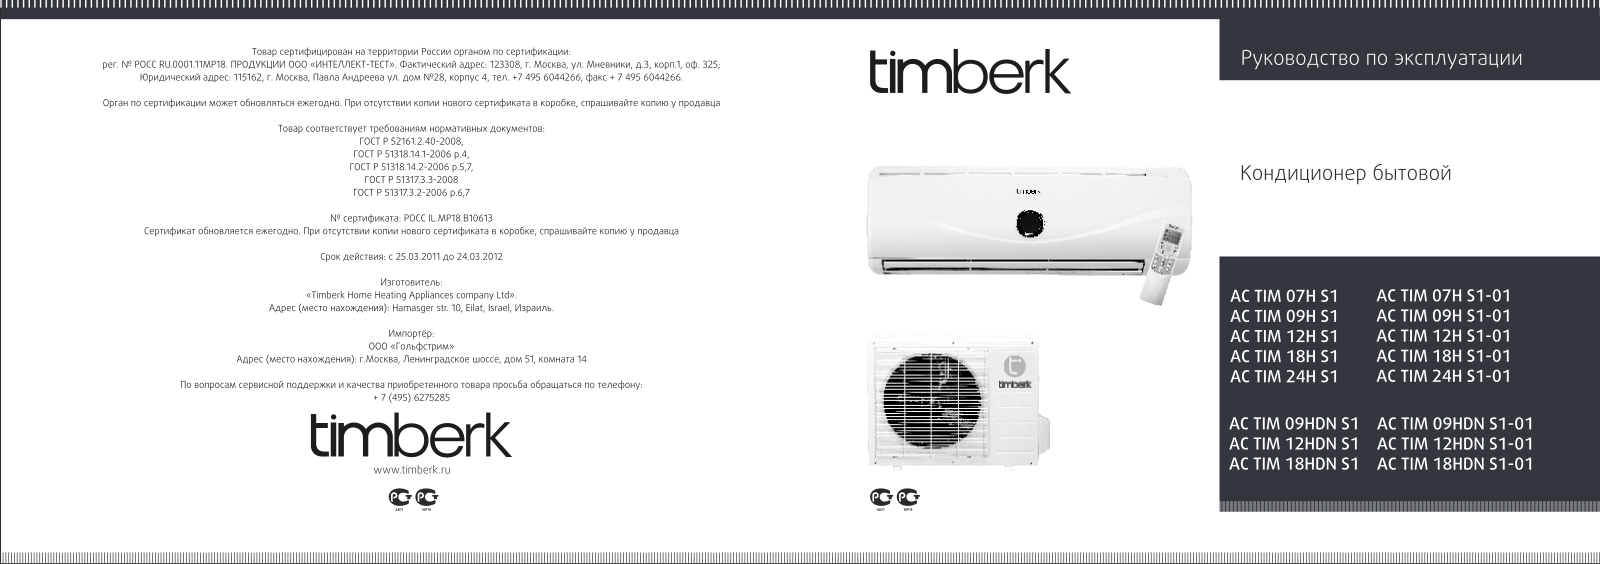 TIMBERK AC TIM 18H S1, AC TIM 24H S1, AC TIM 18HDN S1 User Manual